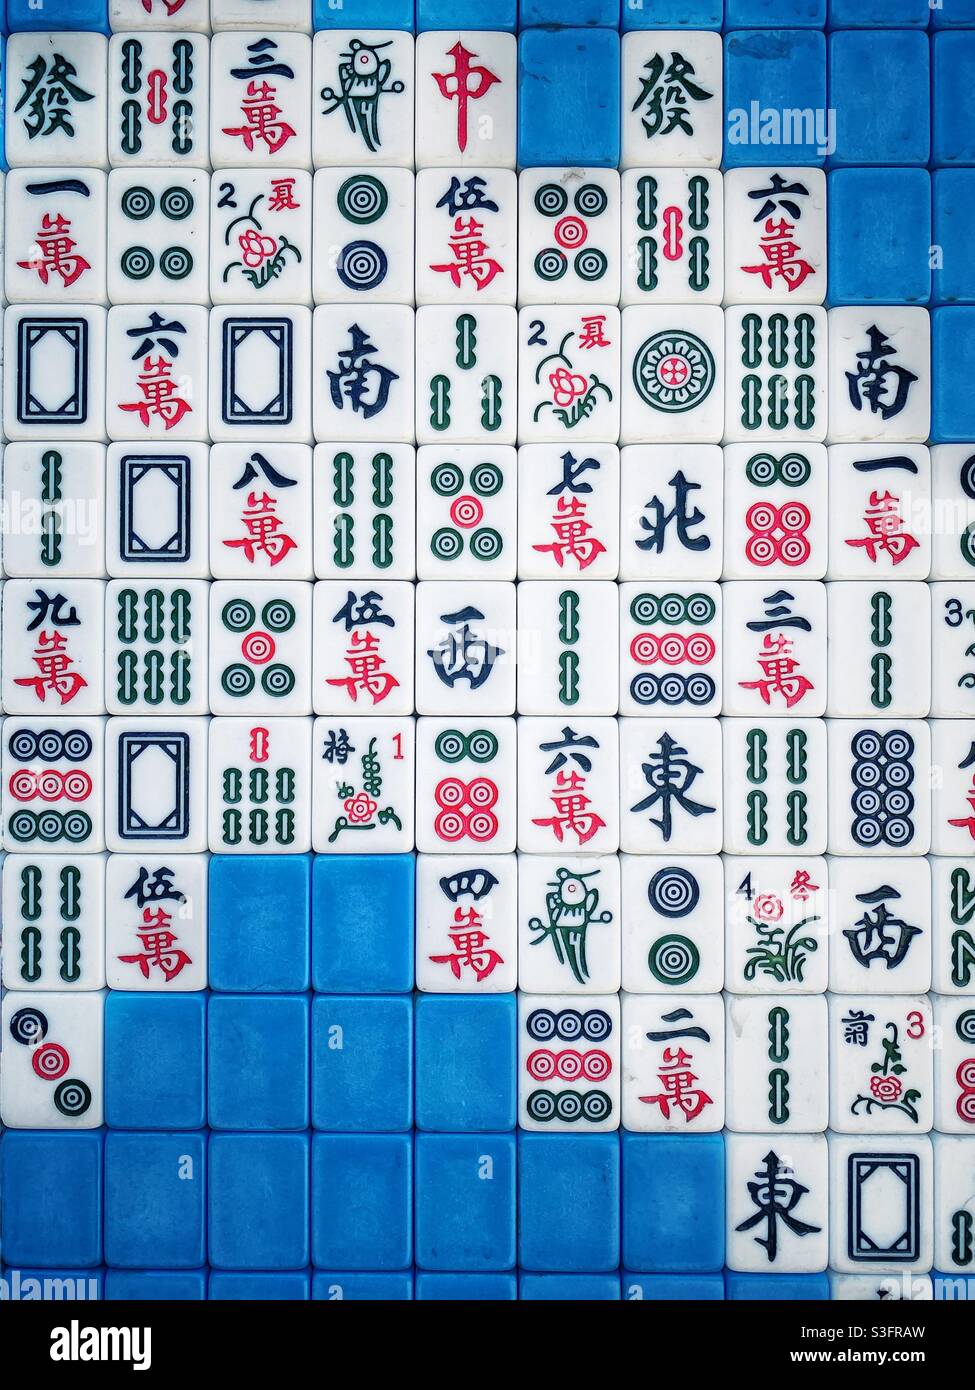 Mahjong tiles, wall decor Stock Photo